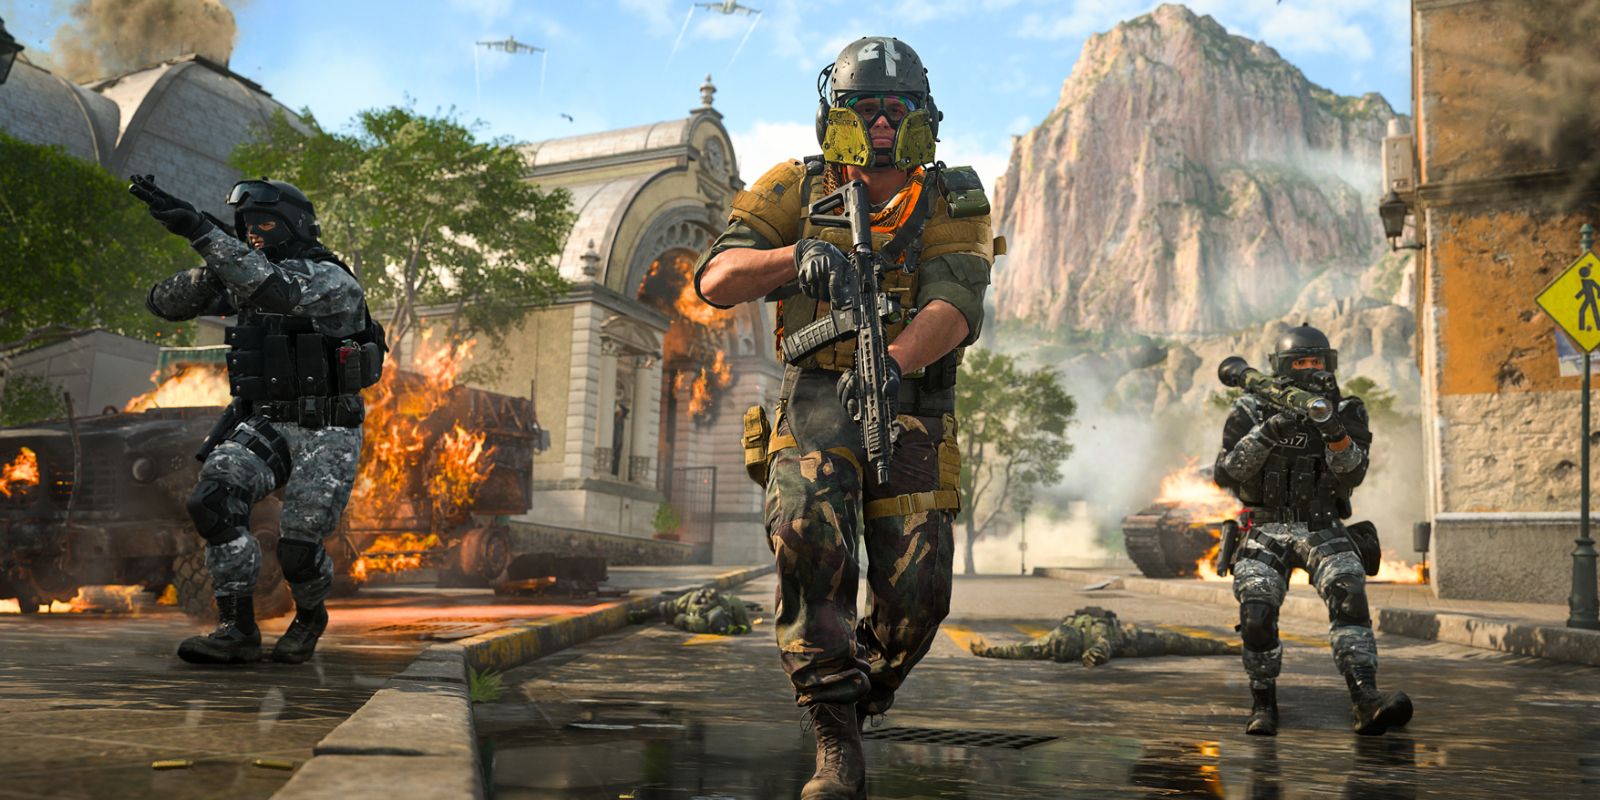 Three teammates in Call of Duty: Modern Warfare 2, weapons drawn.